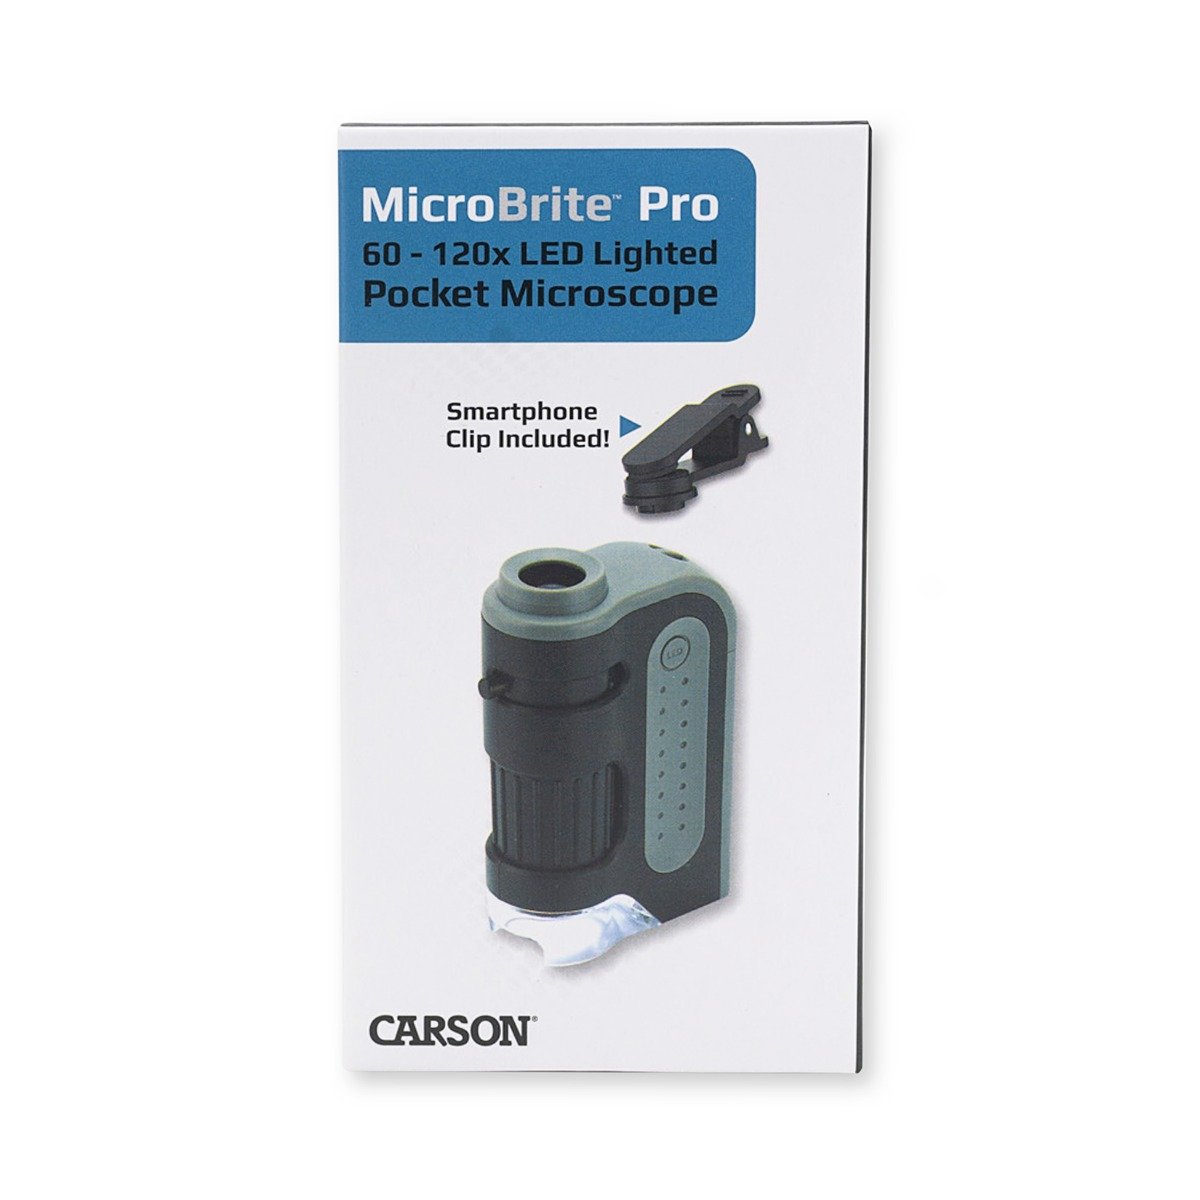 Microscop de buzunar cu LED, Carson, marire 60-120x, cu adaptor pentru smartphone, MicroBrite